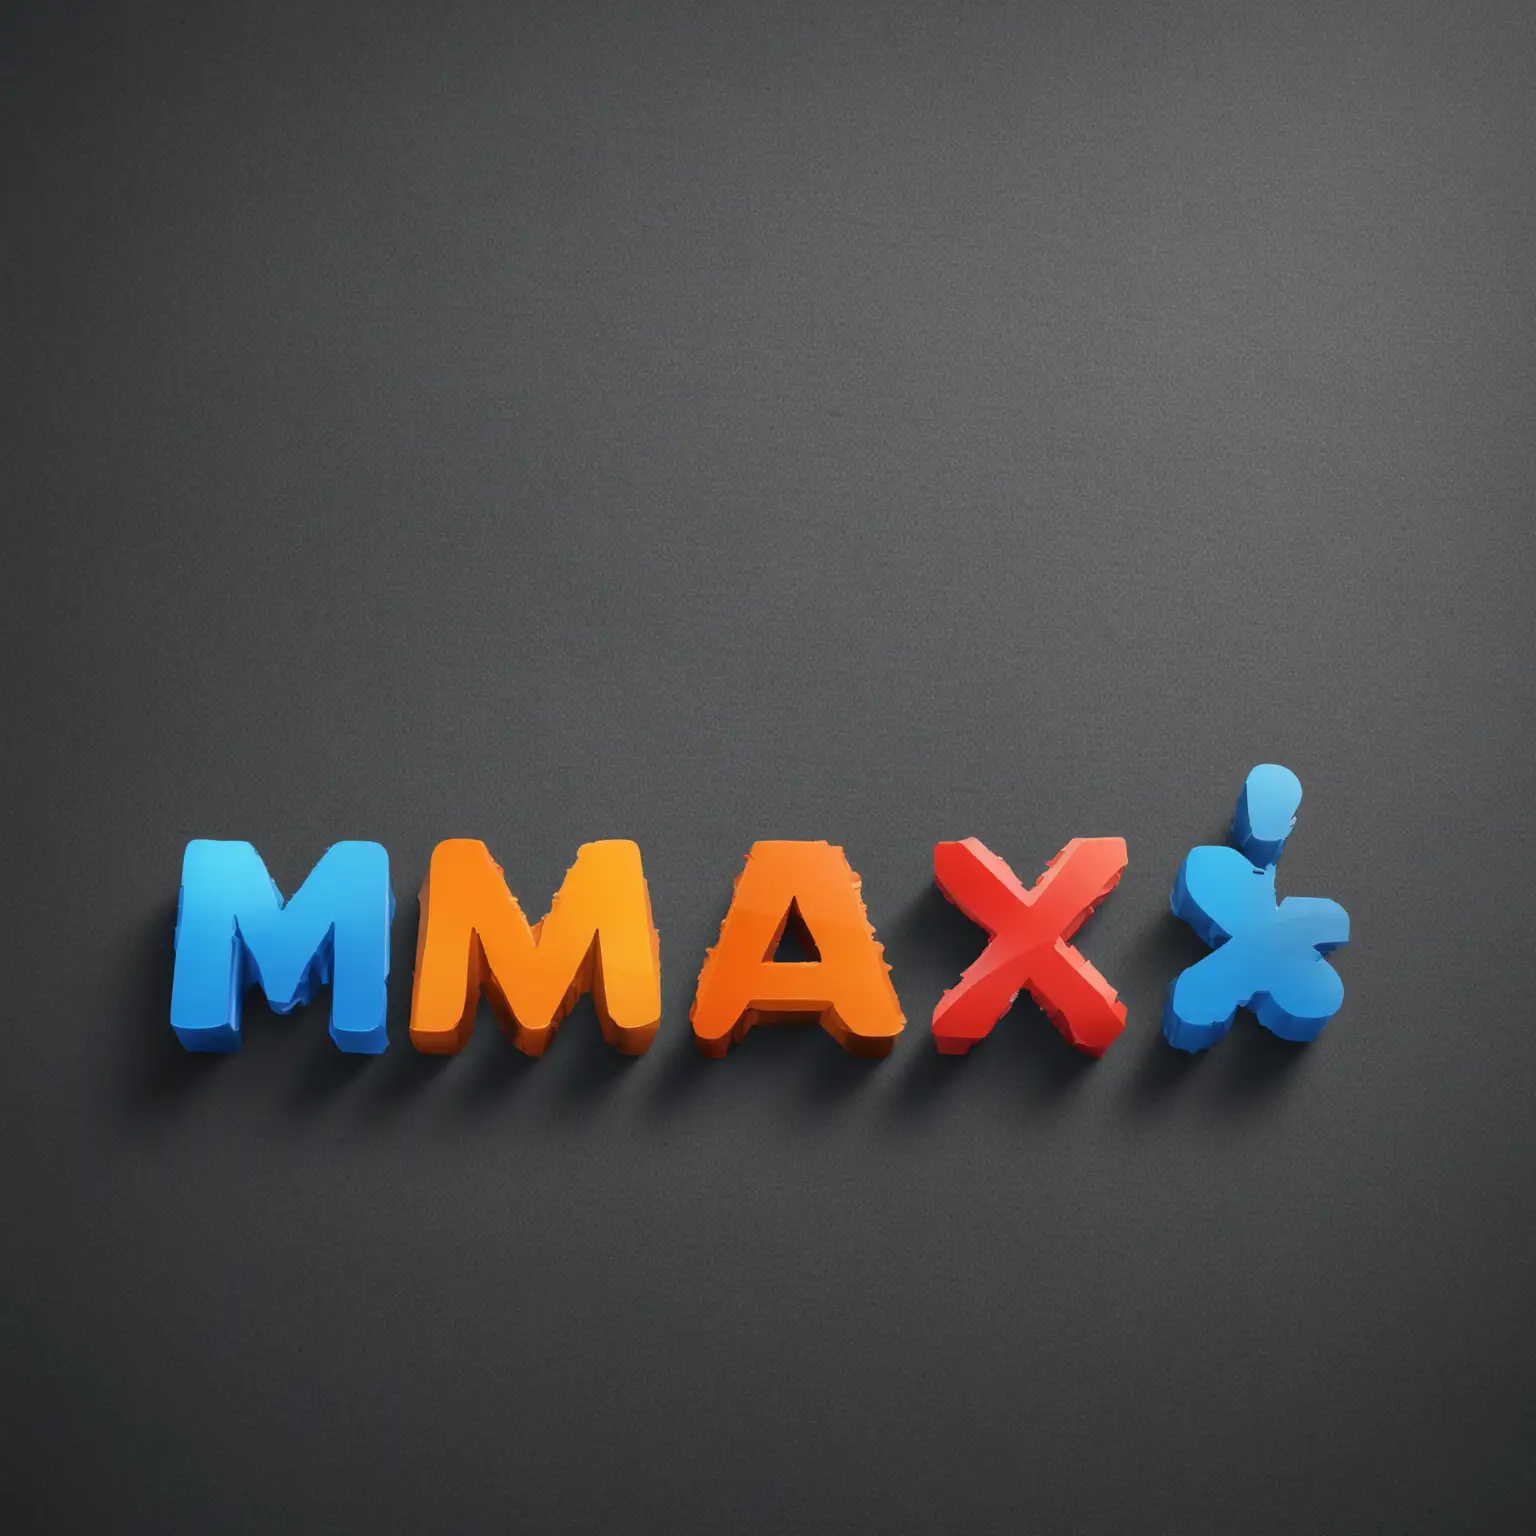 create a social media logo, red, orange, blue, tech, happy, cool, include word MAKX